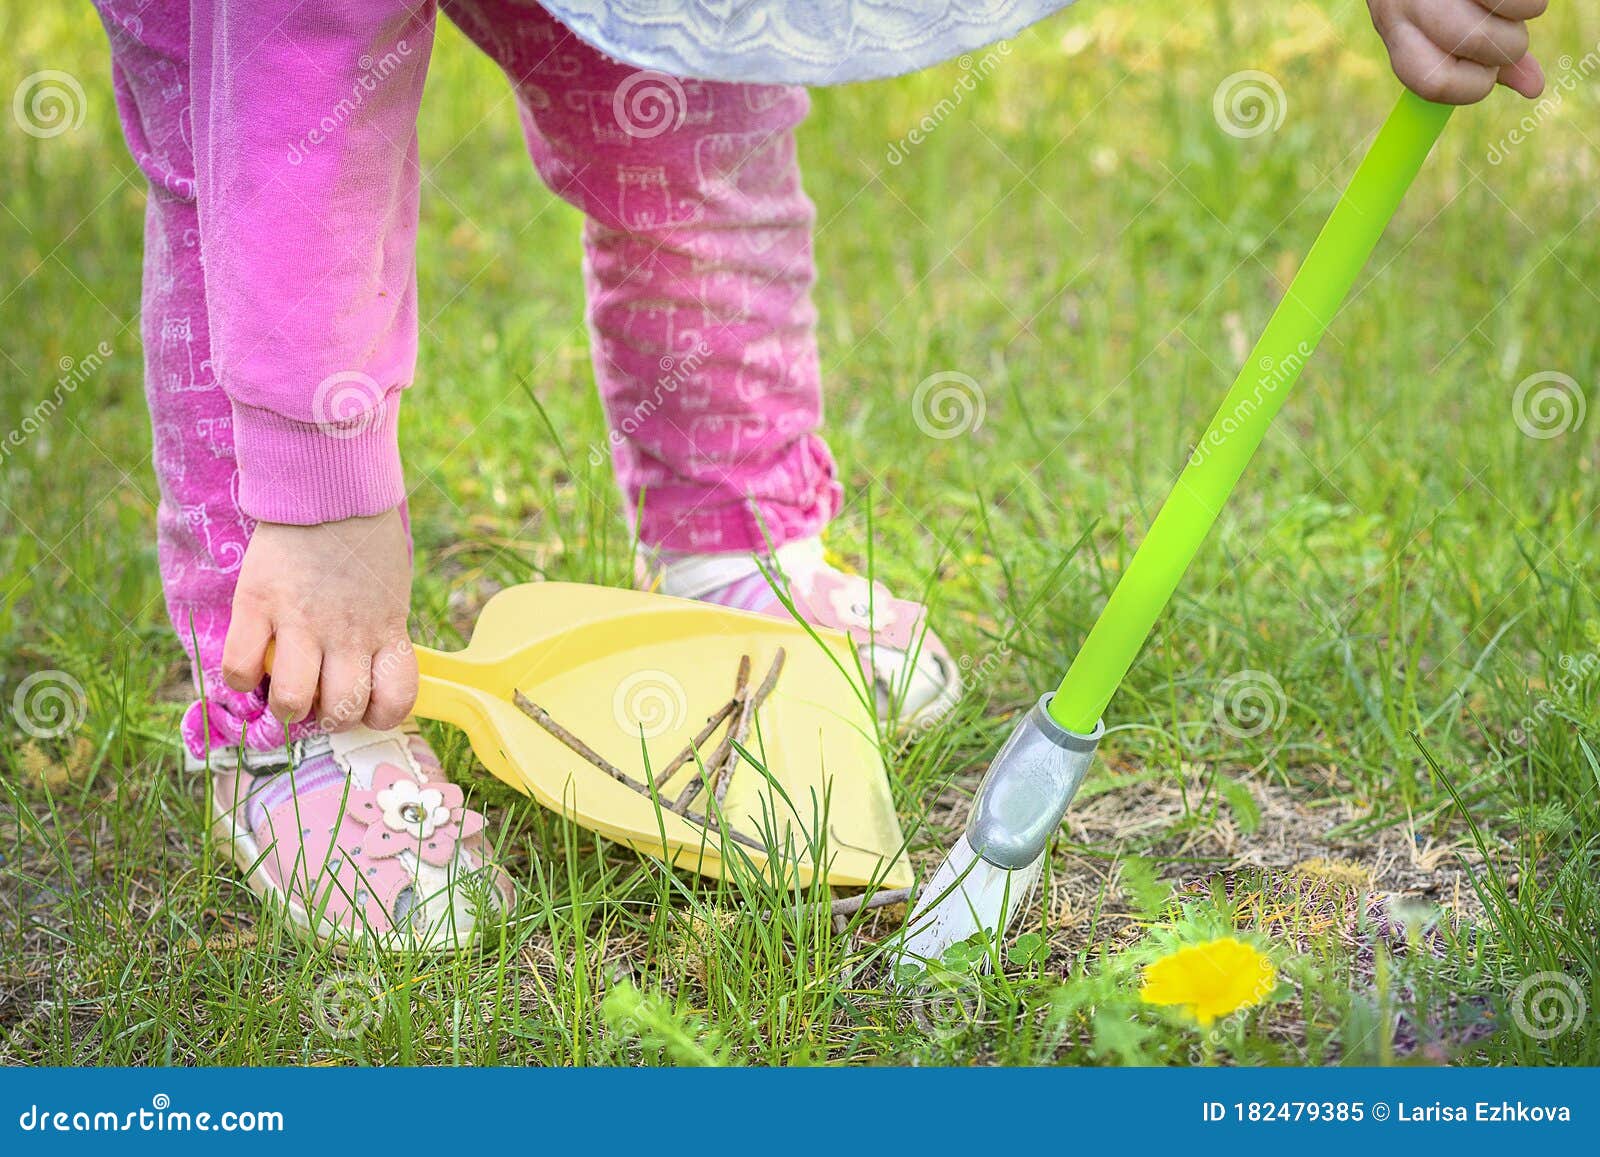 https://thumbs.dreamstime.com/z/toddler-sweeping-trash-green-lawn-selective-focus-182479385.jpg